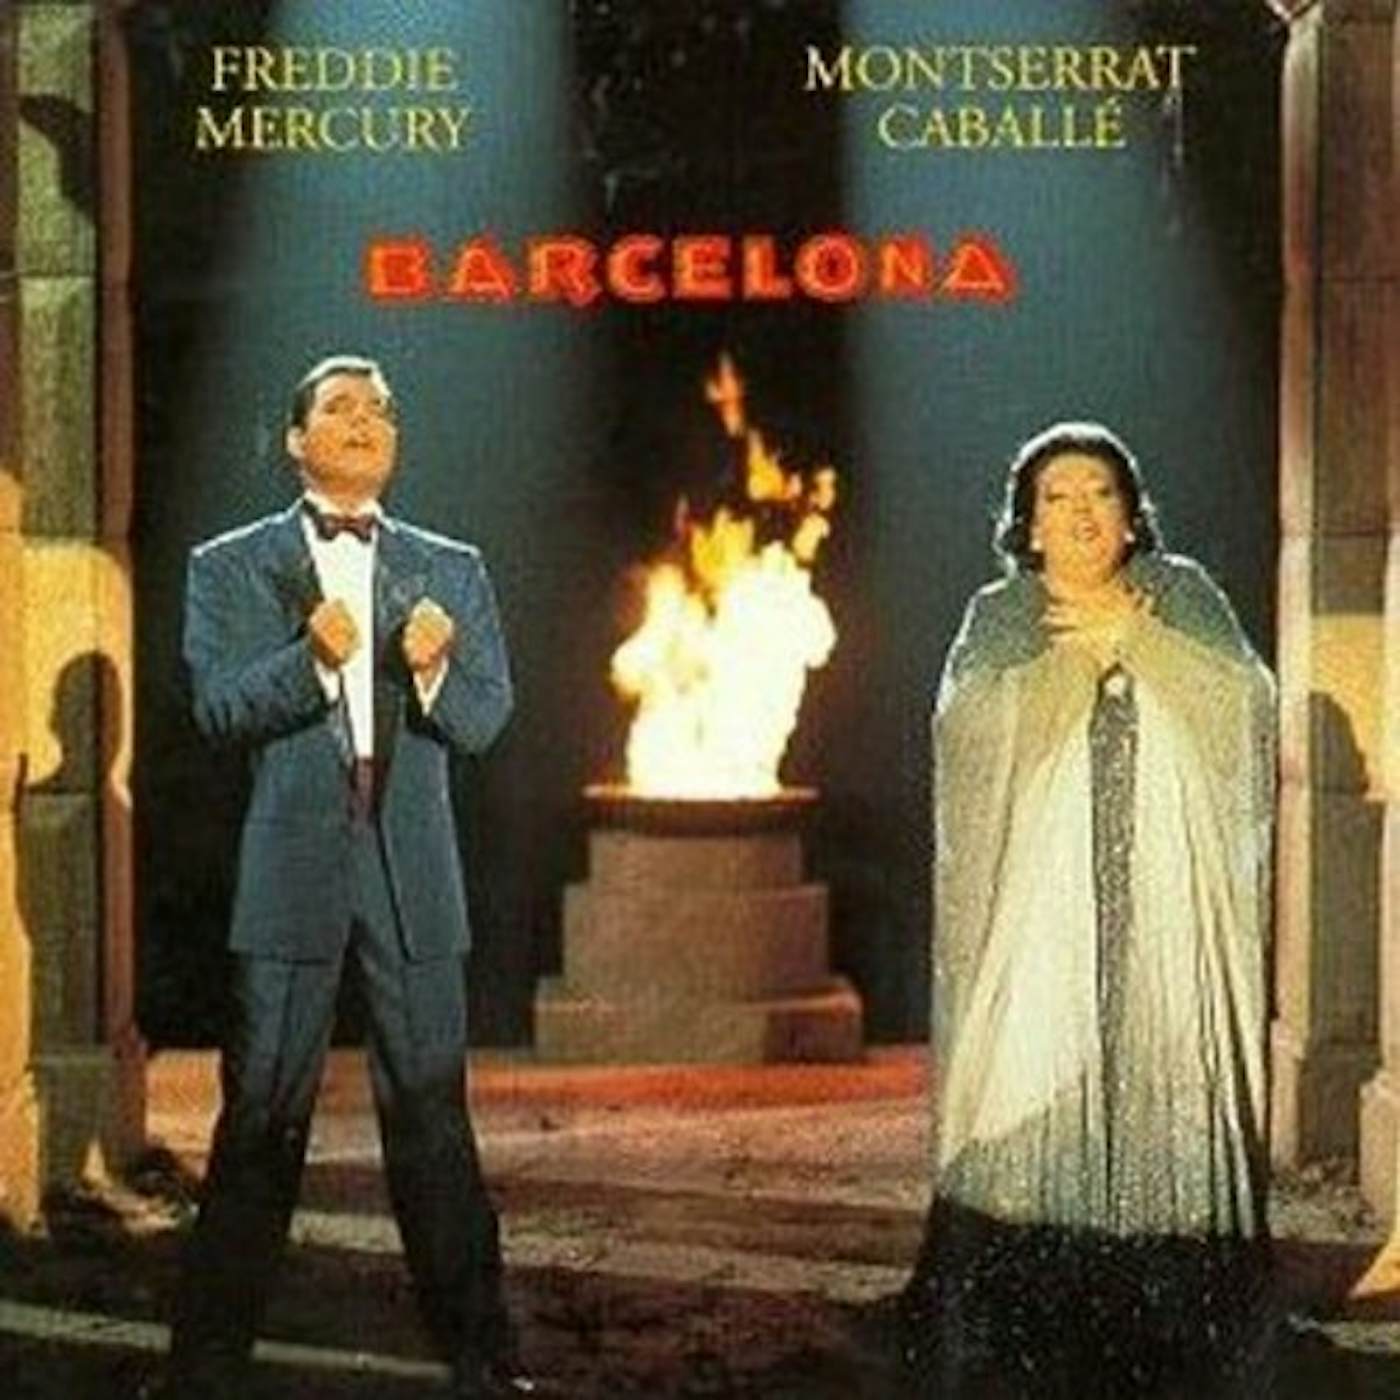 Freddie Mercury BARCELONA CD